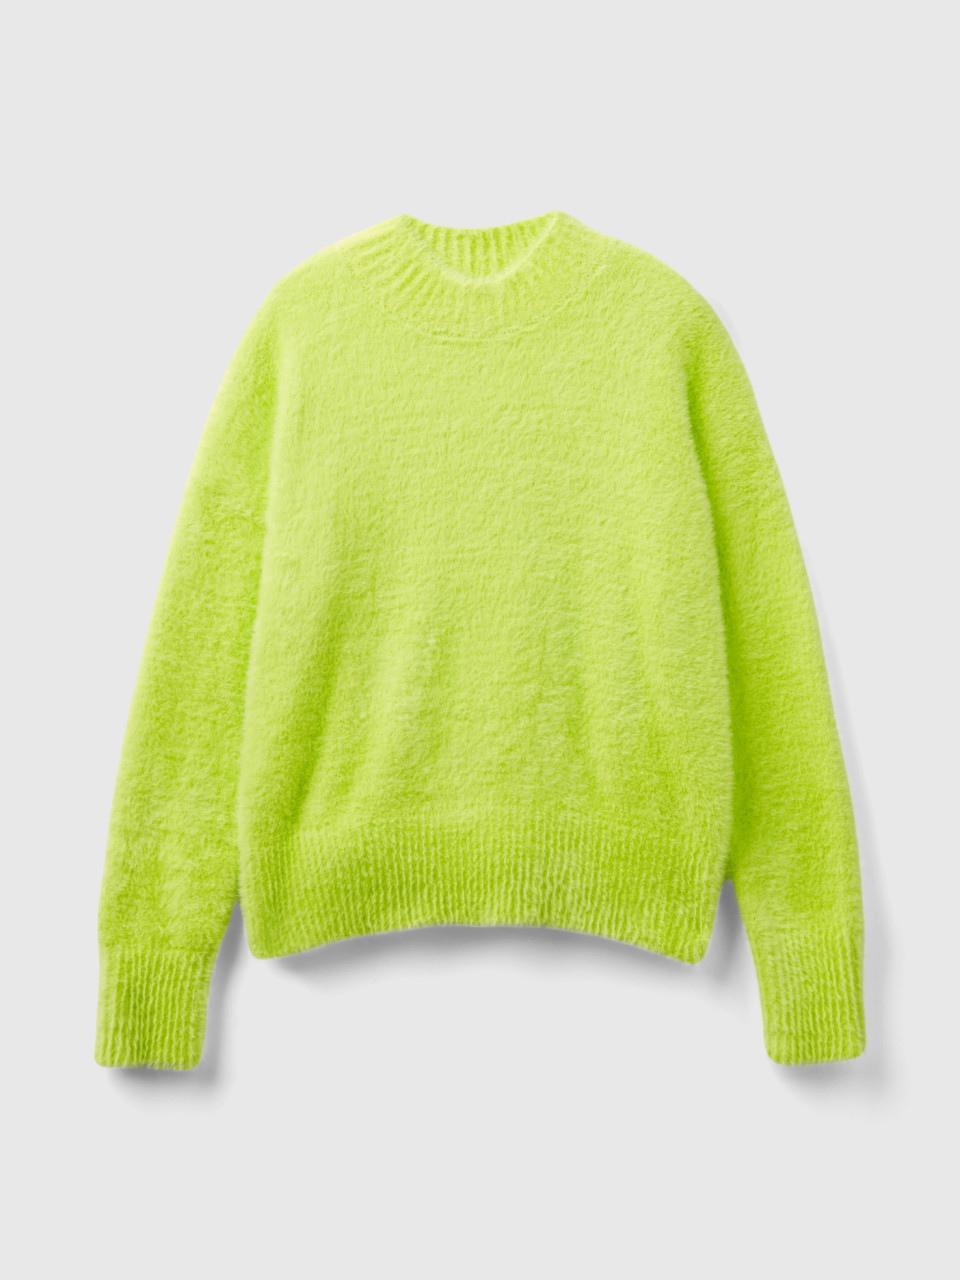 Benetton, Furry Yarn Turtleneck Sweater, Yellow, Kids